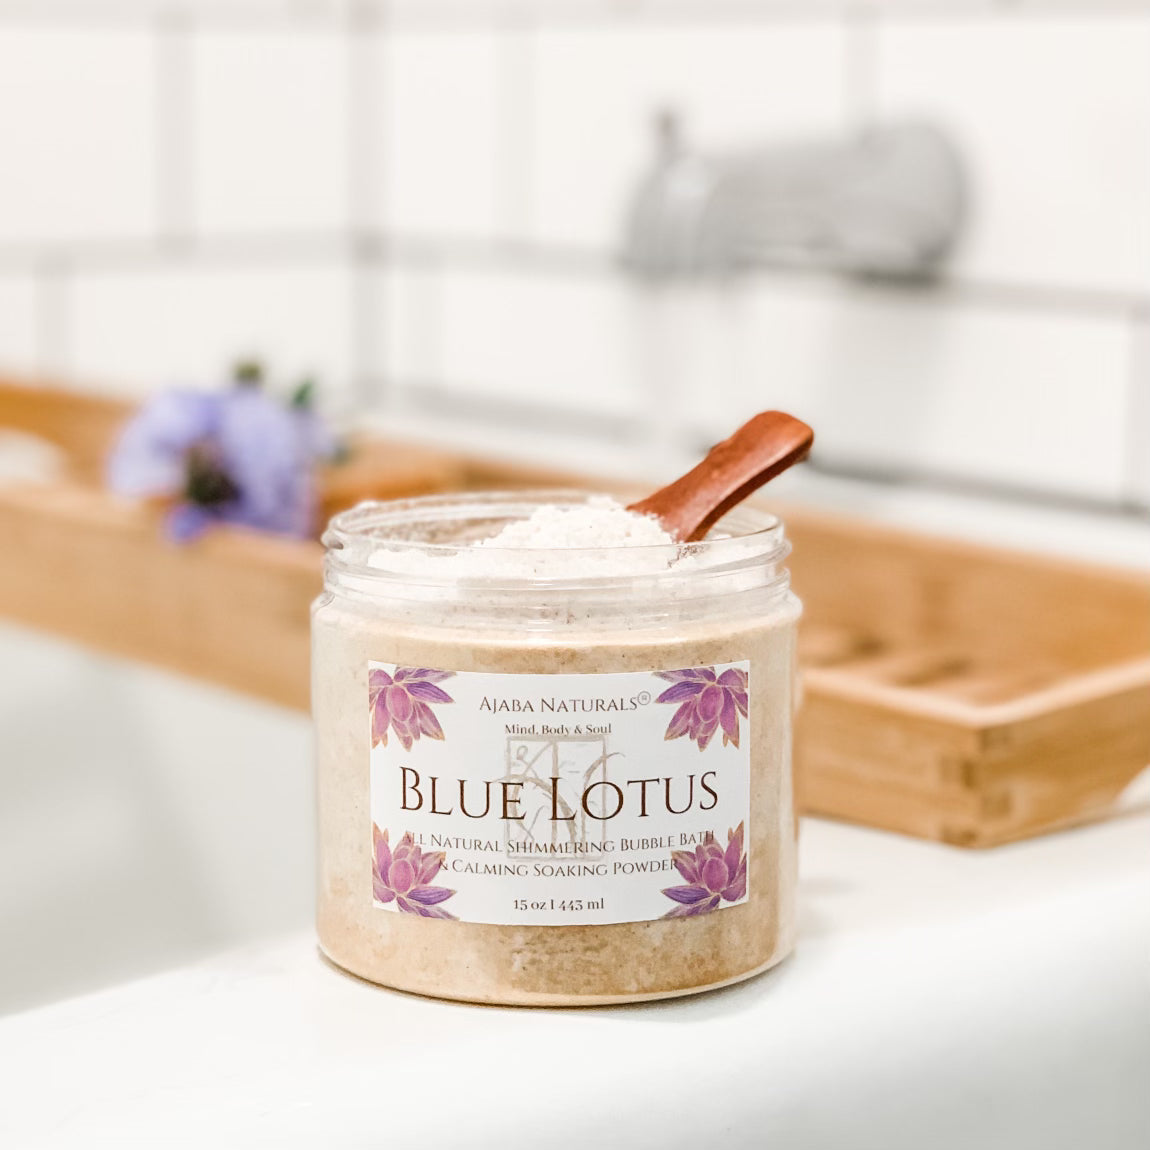 All Natural Shimmering Bubble Bath and Calming Soak Powder Bath Soak AJABA NATURALS® Blue Lotus 